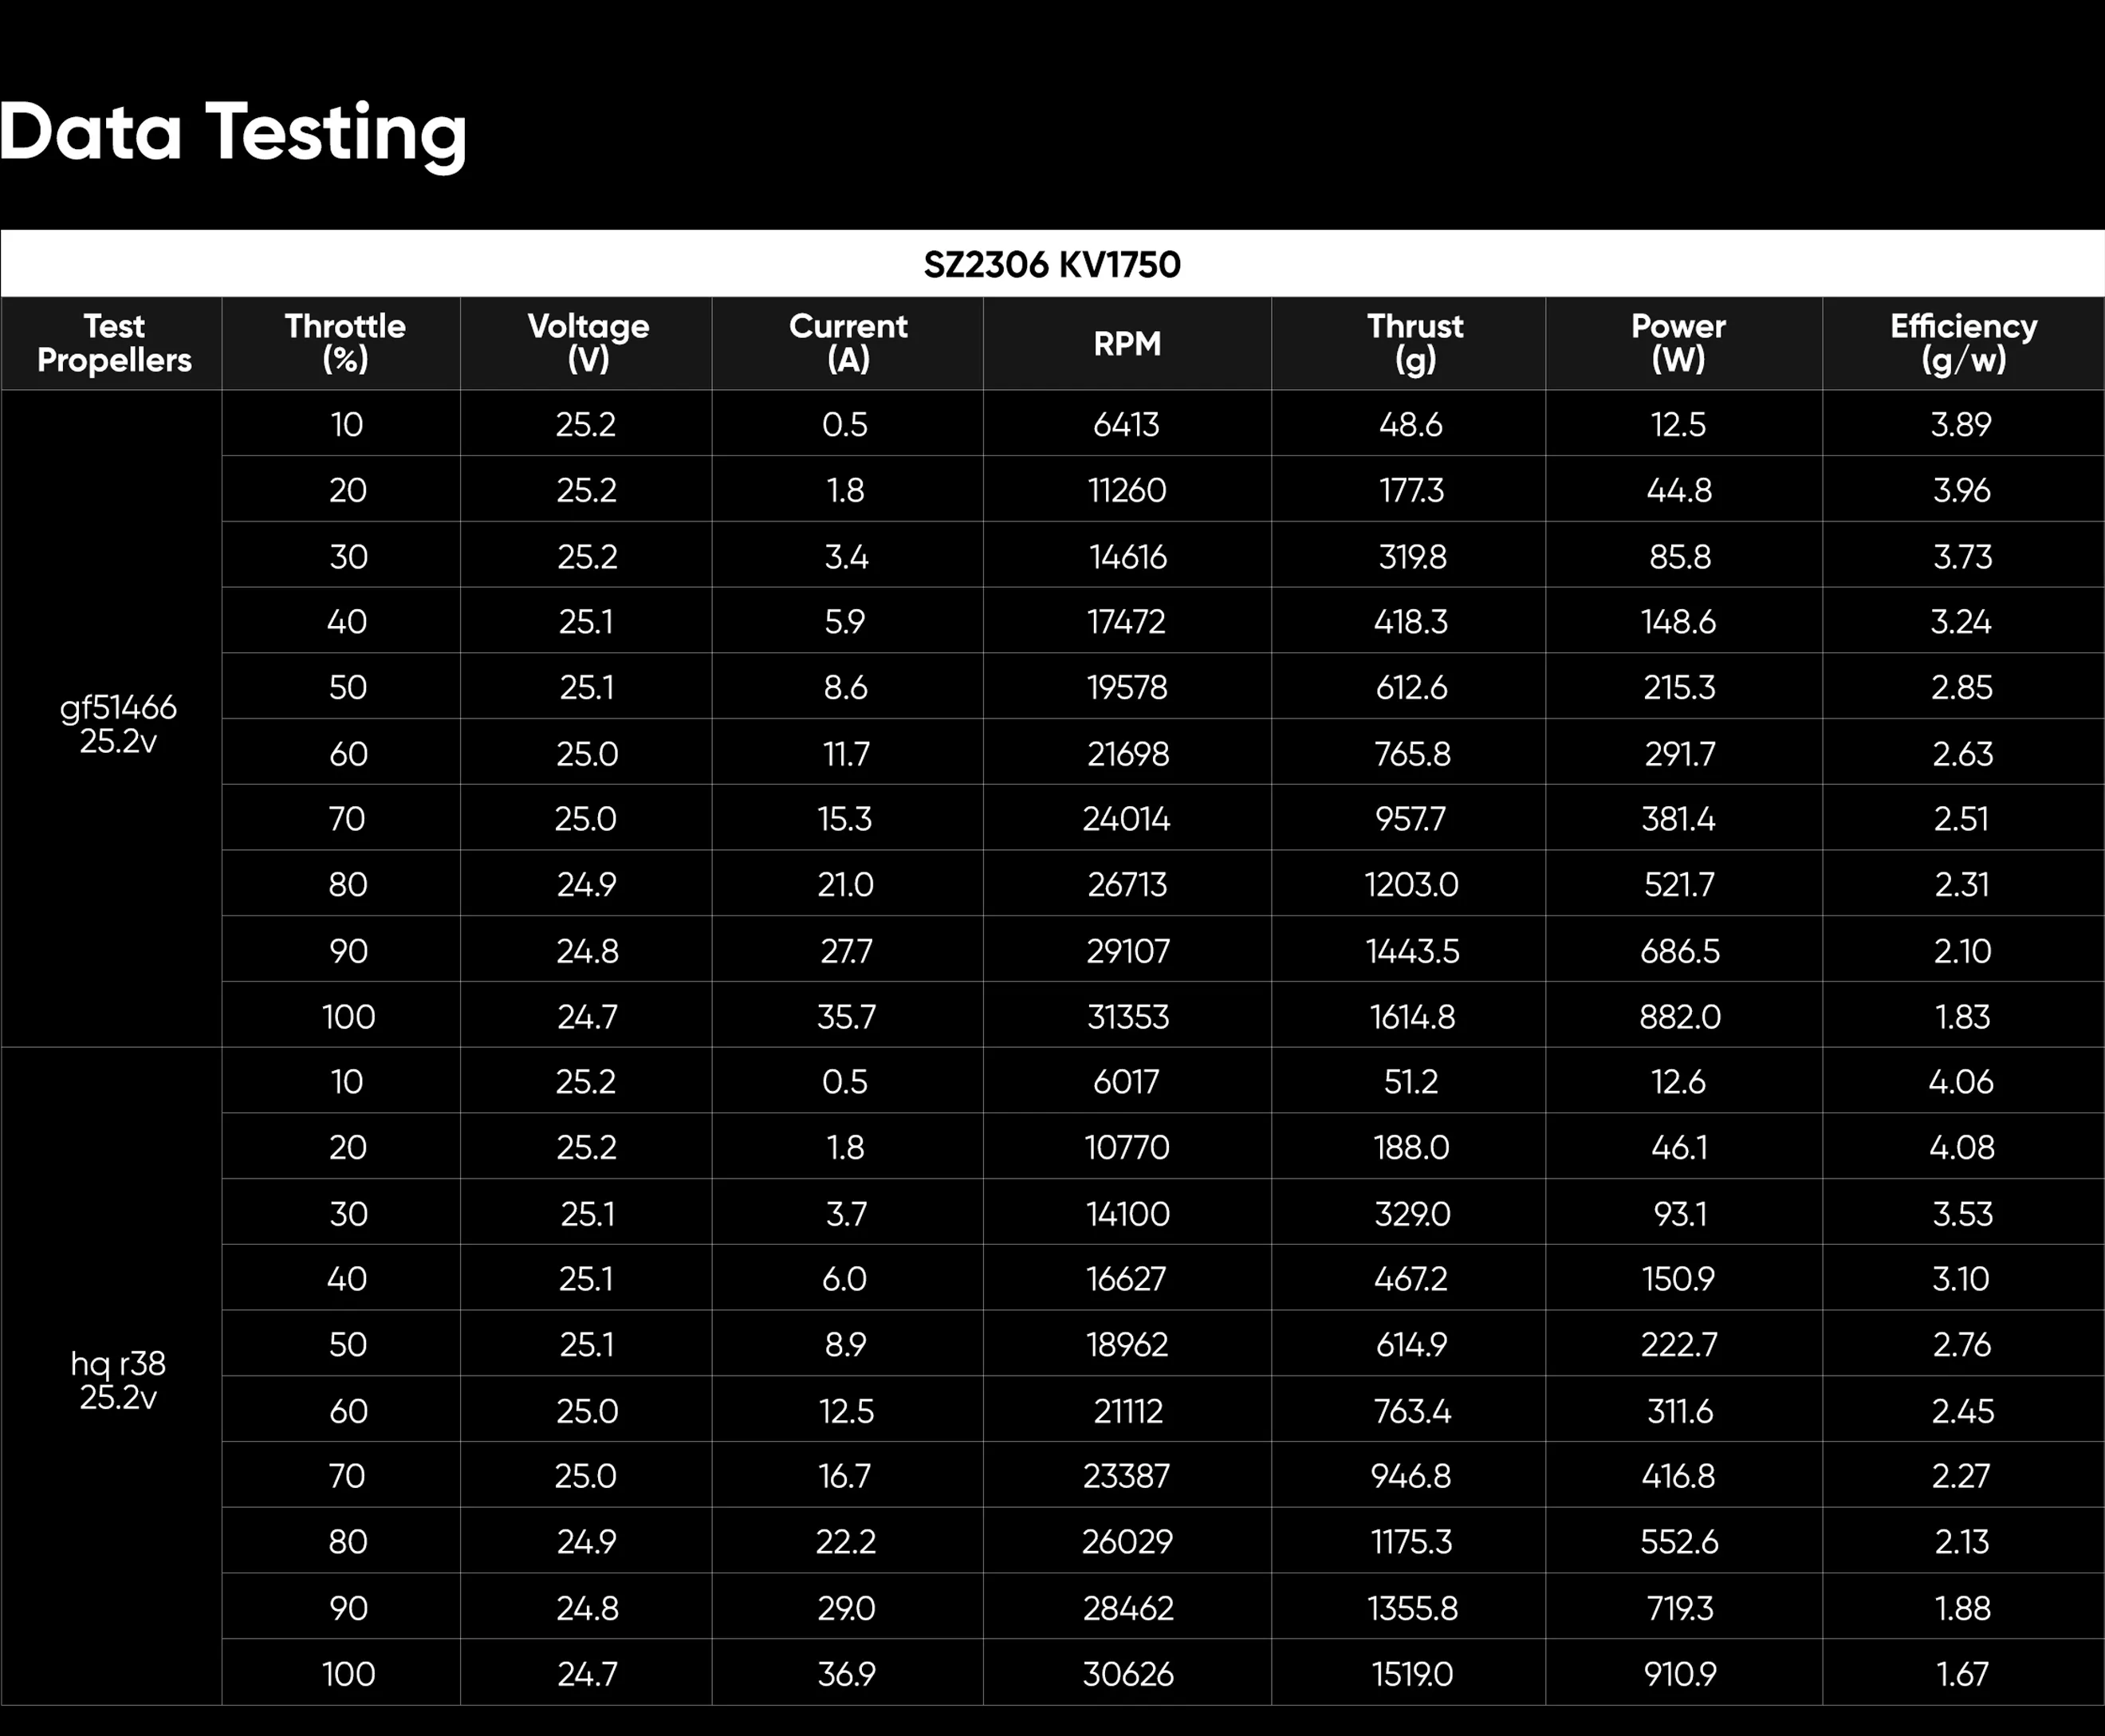 2306 1750kv data testing chart